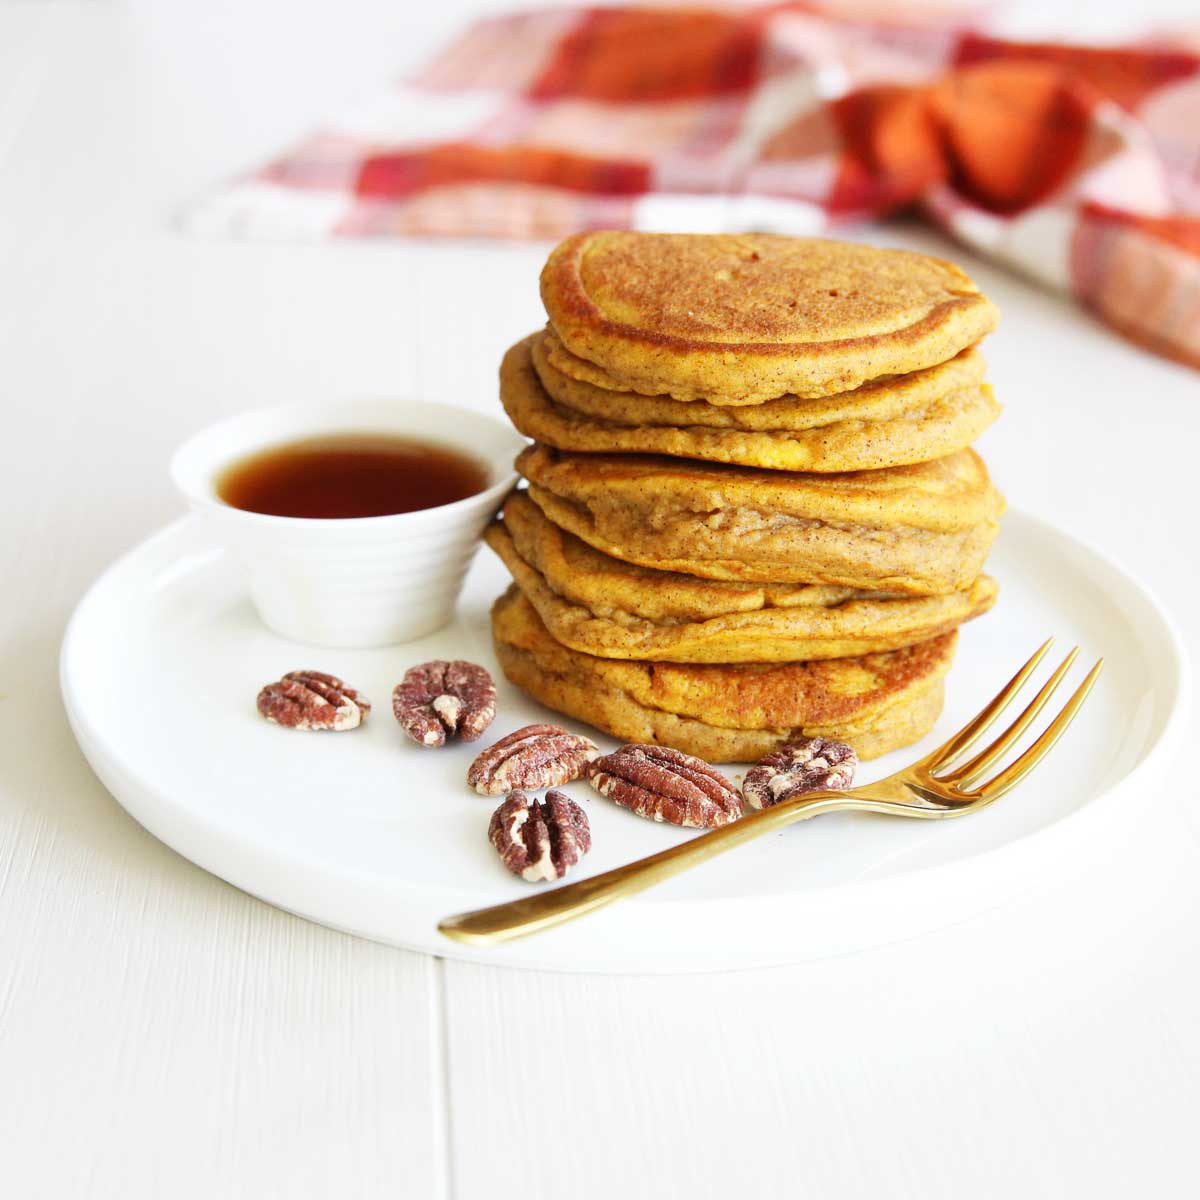 Gluten Free Greek Yogurt Pancakes Recipe (Healthy & High in Protein) - Greek Yogurt Pancakes